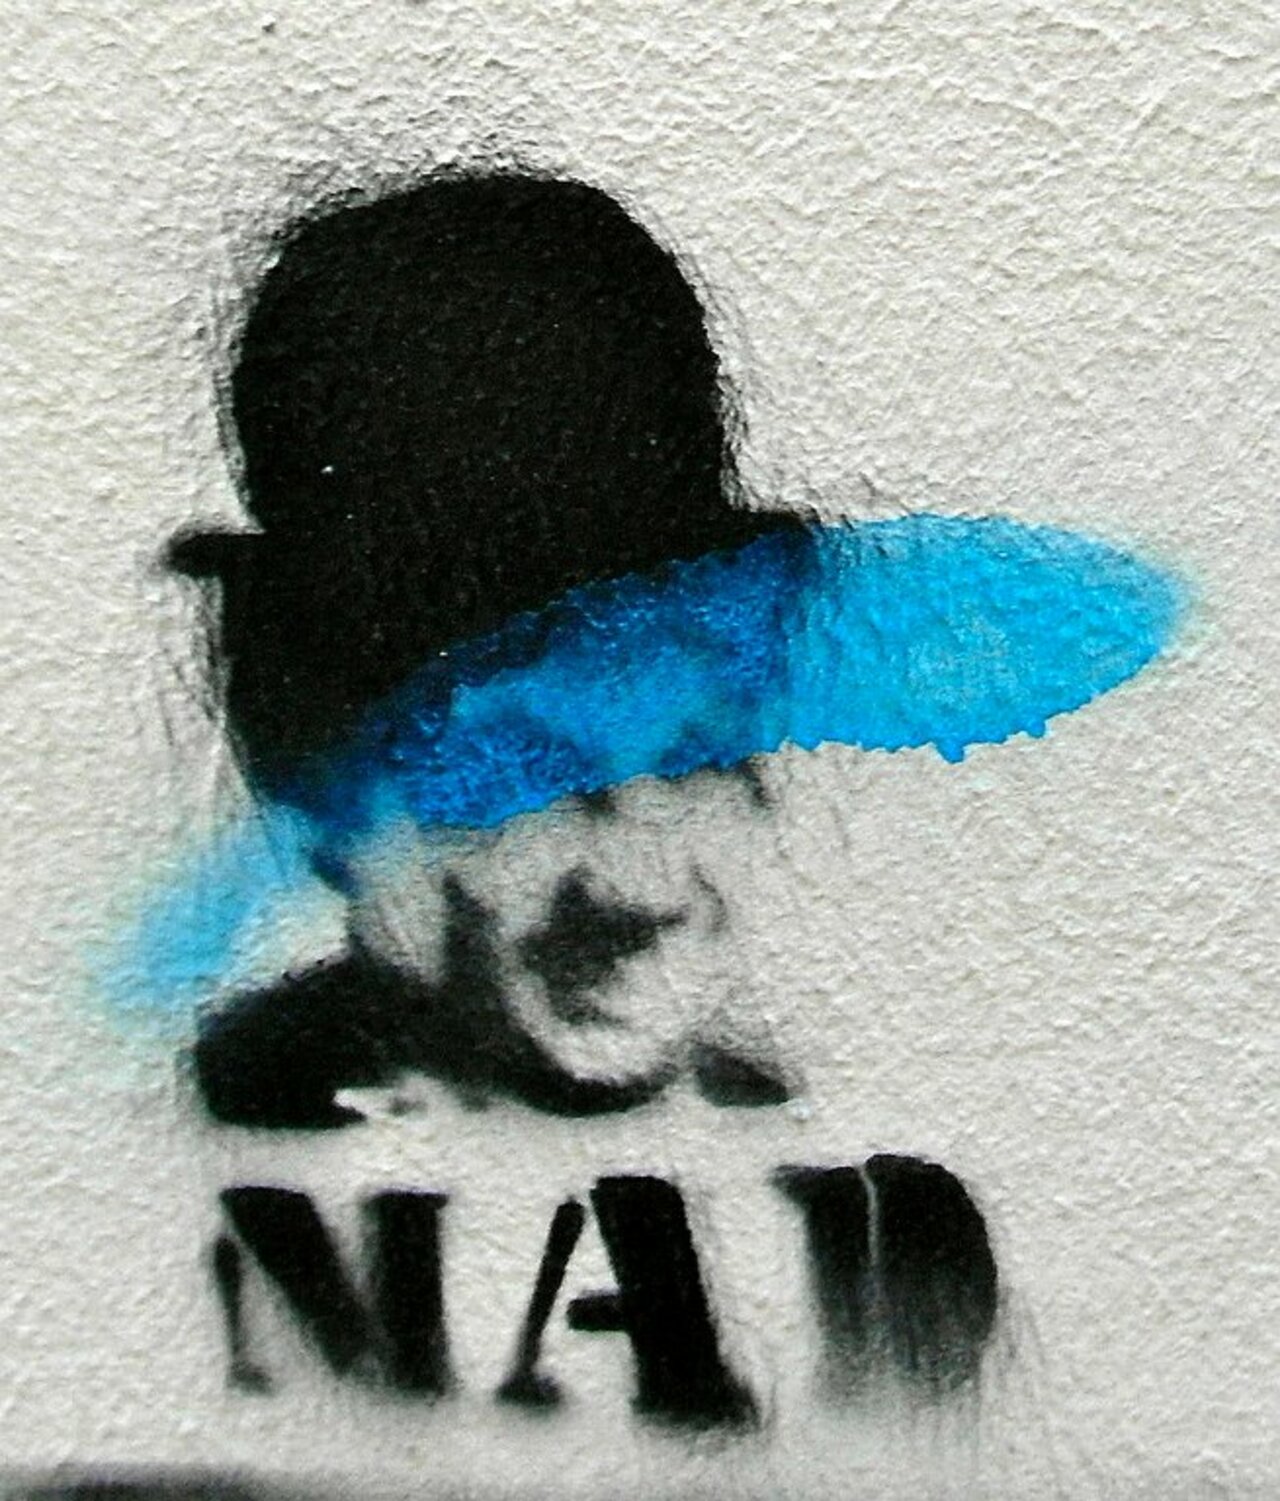 Street Art by anonymous in # http://www.urbacolors.com #art #mural #graffiti #streetart https://t.co/utJqsJyWG1